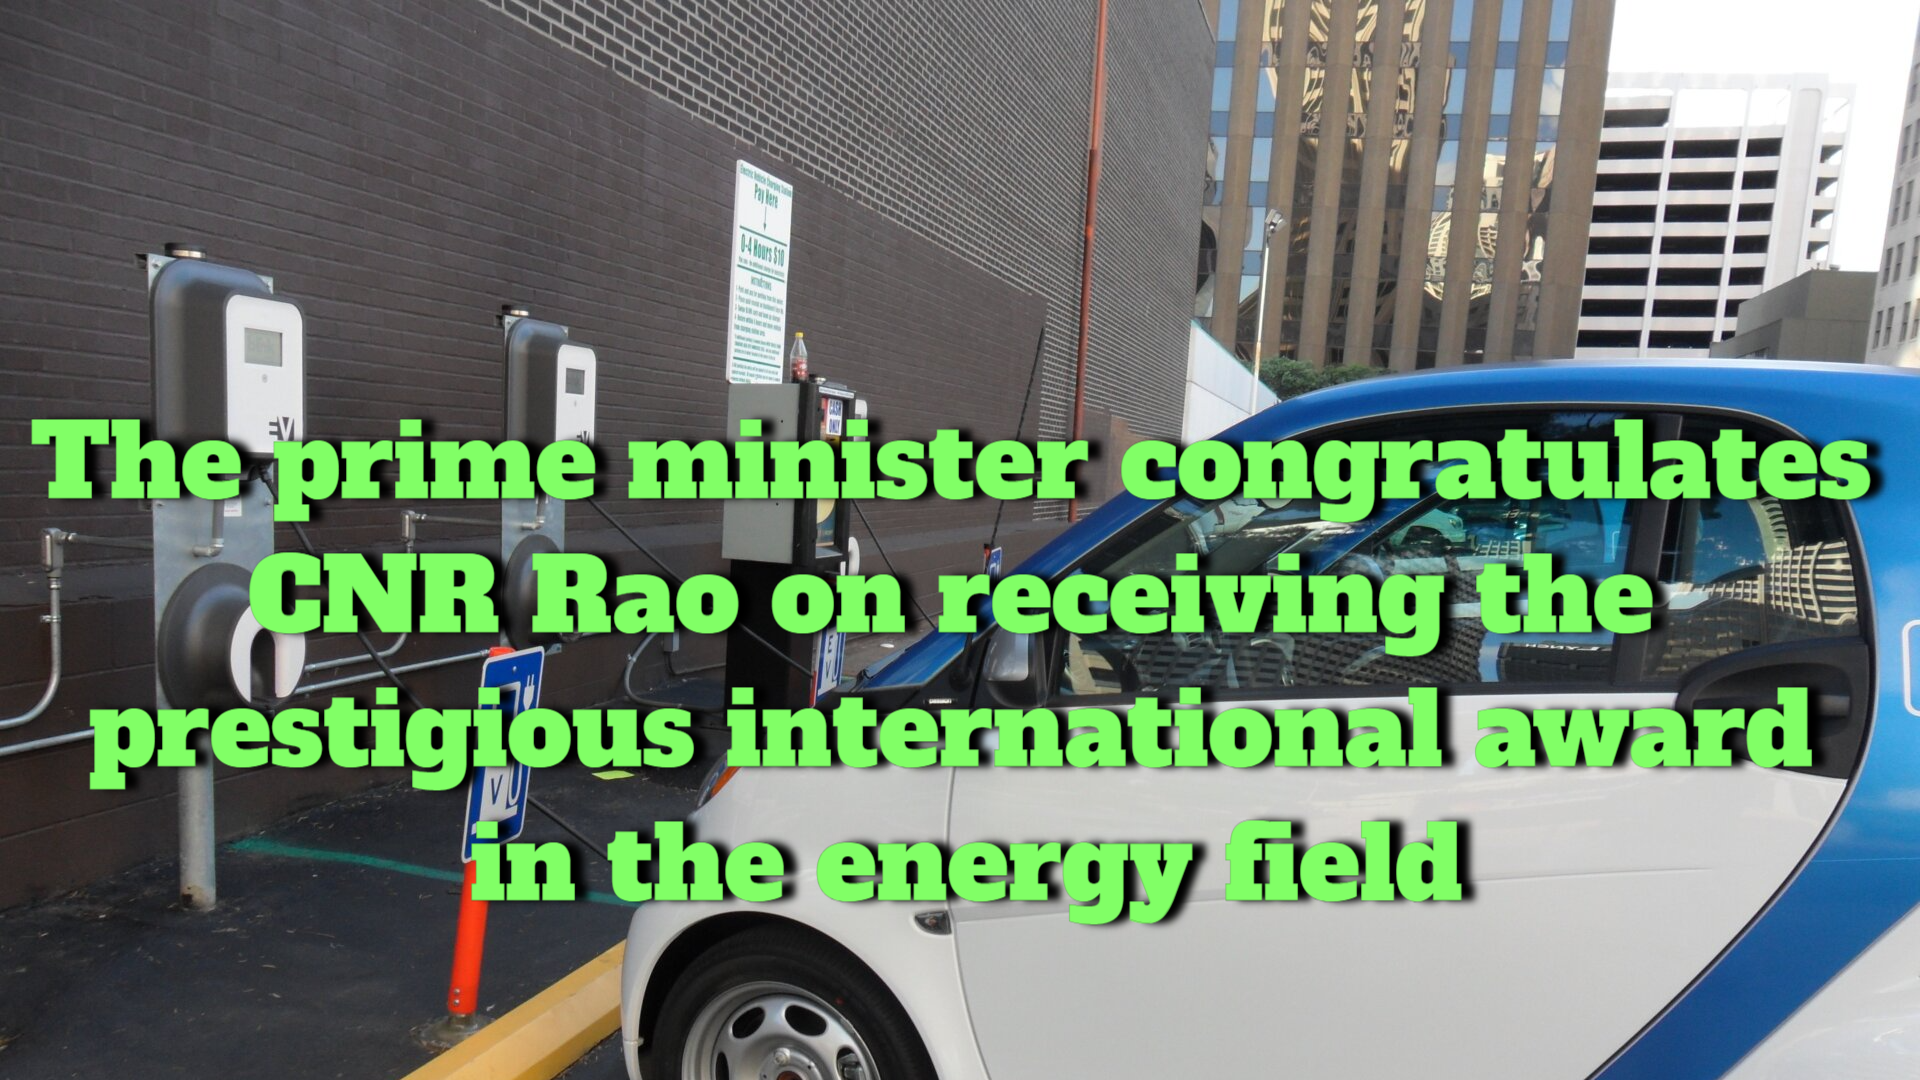 Prime Minister congratulates CNR Rao for receiving a prestigious international award in energy research.